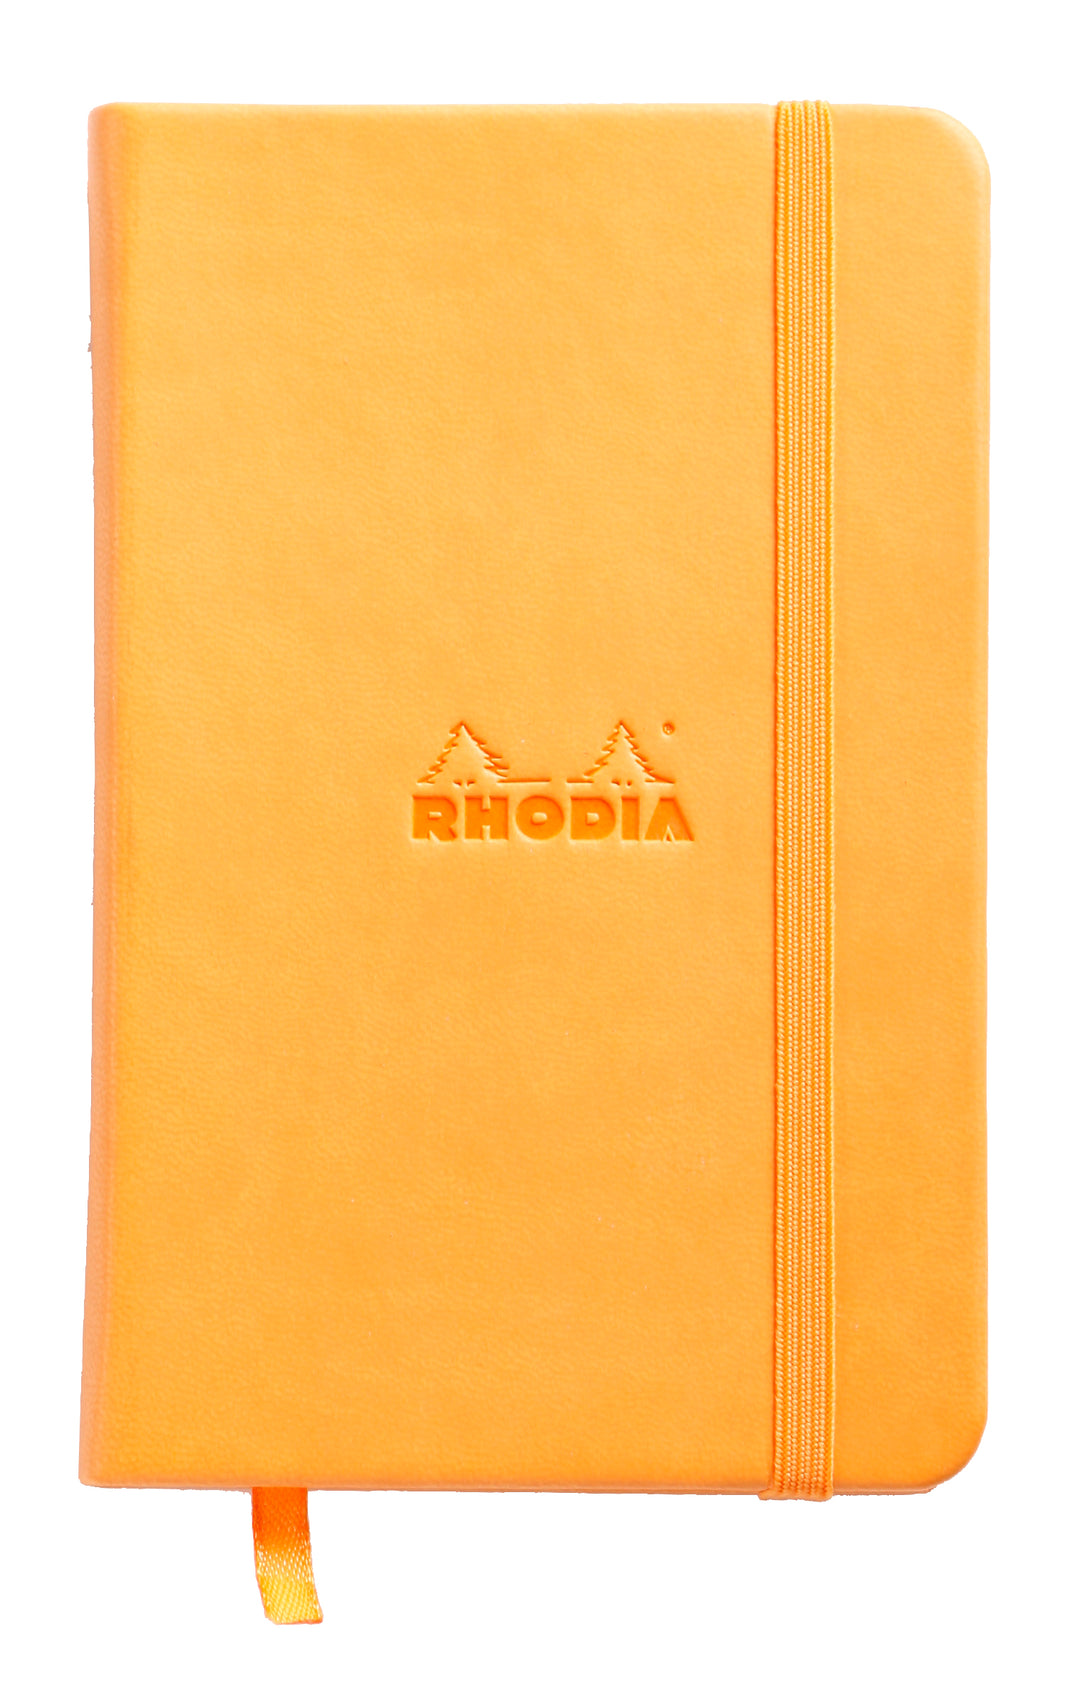 Rhodia Boutique Hardbound Line Ruled Webnotebook - A5